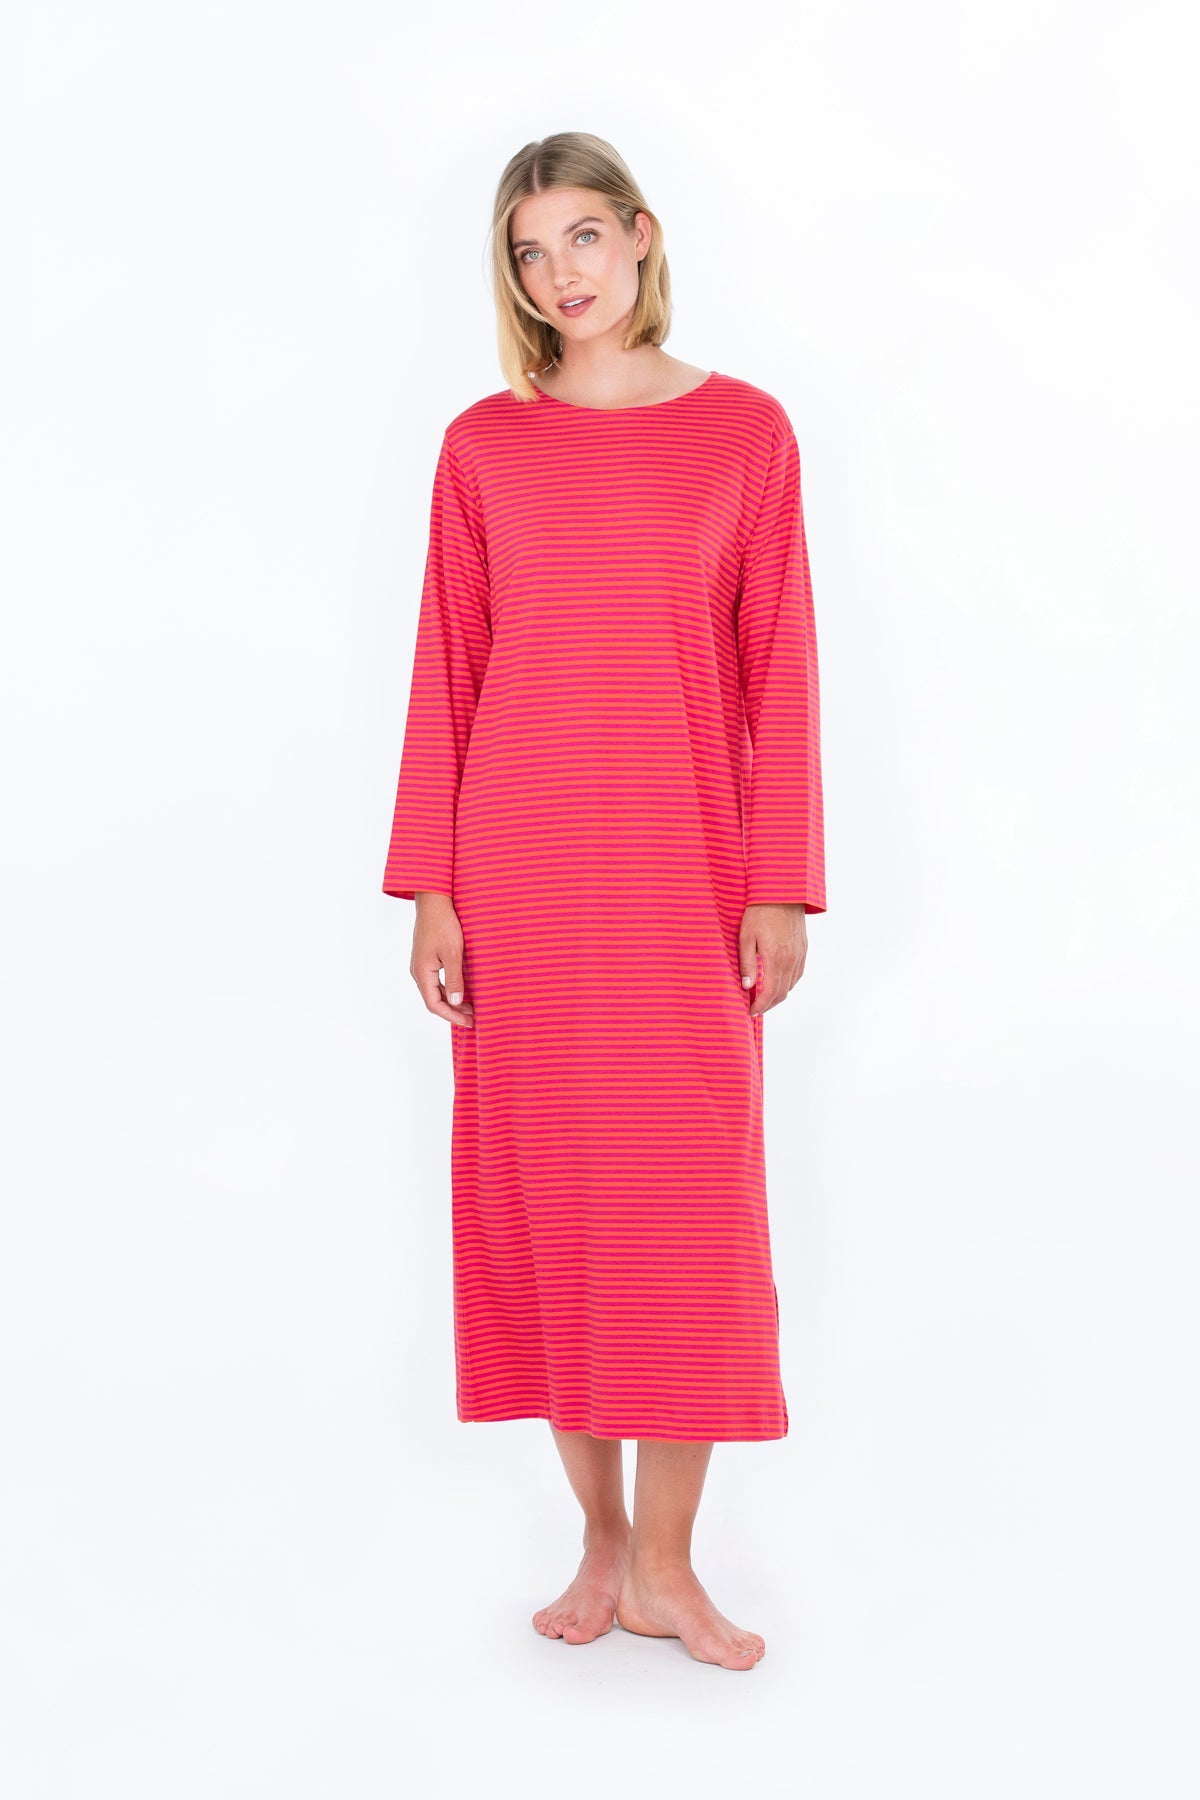 URSULA nightgown orange-pink